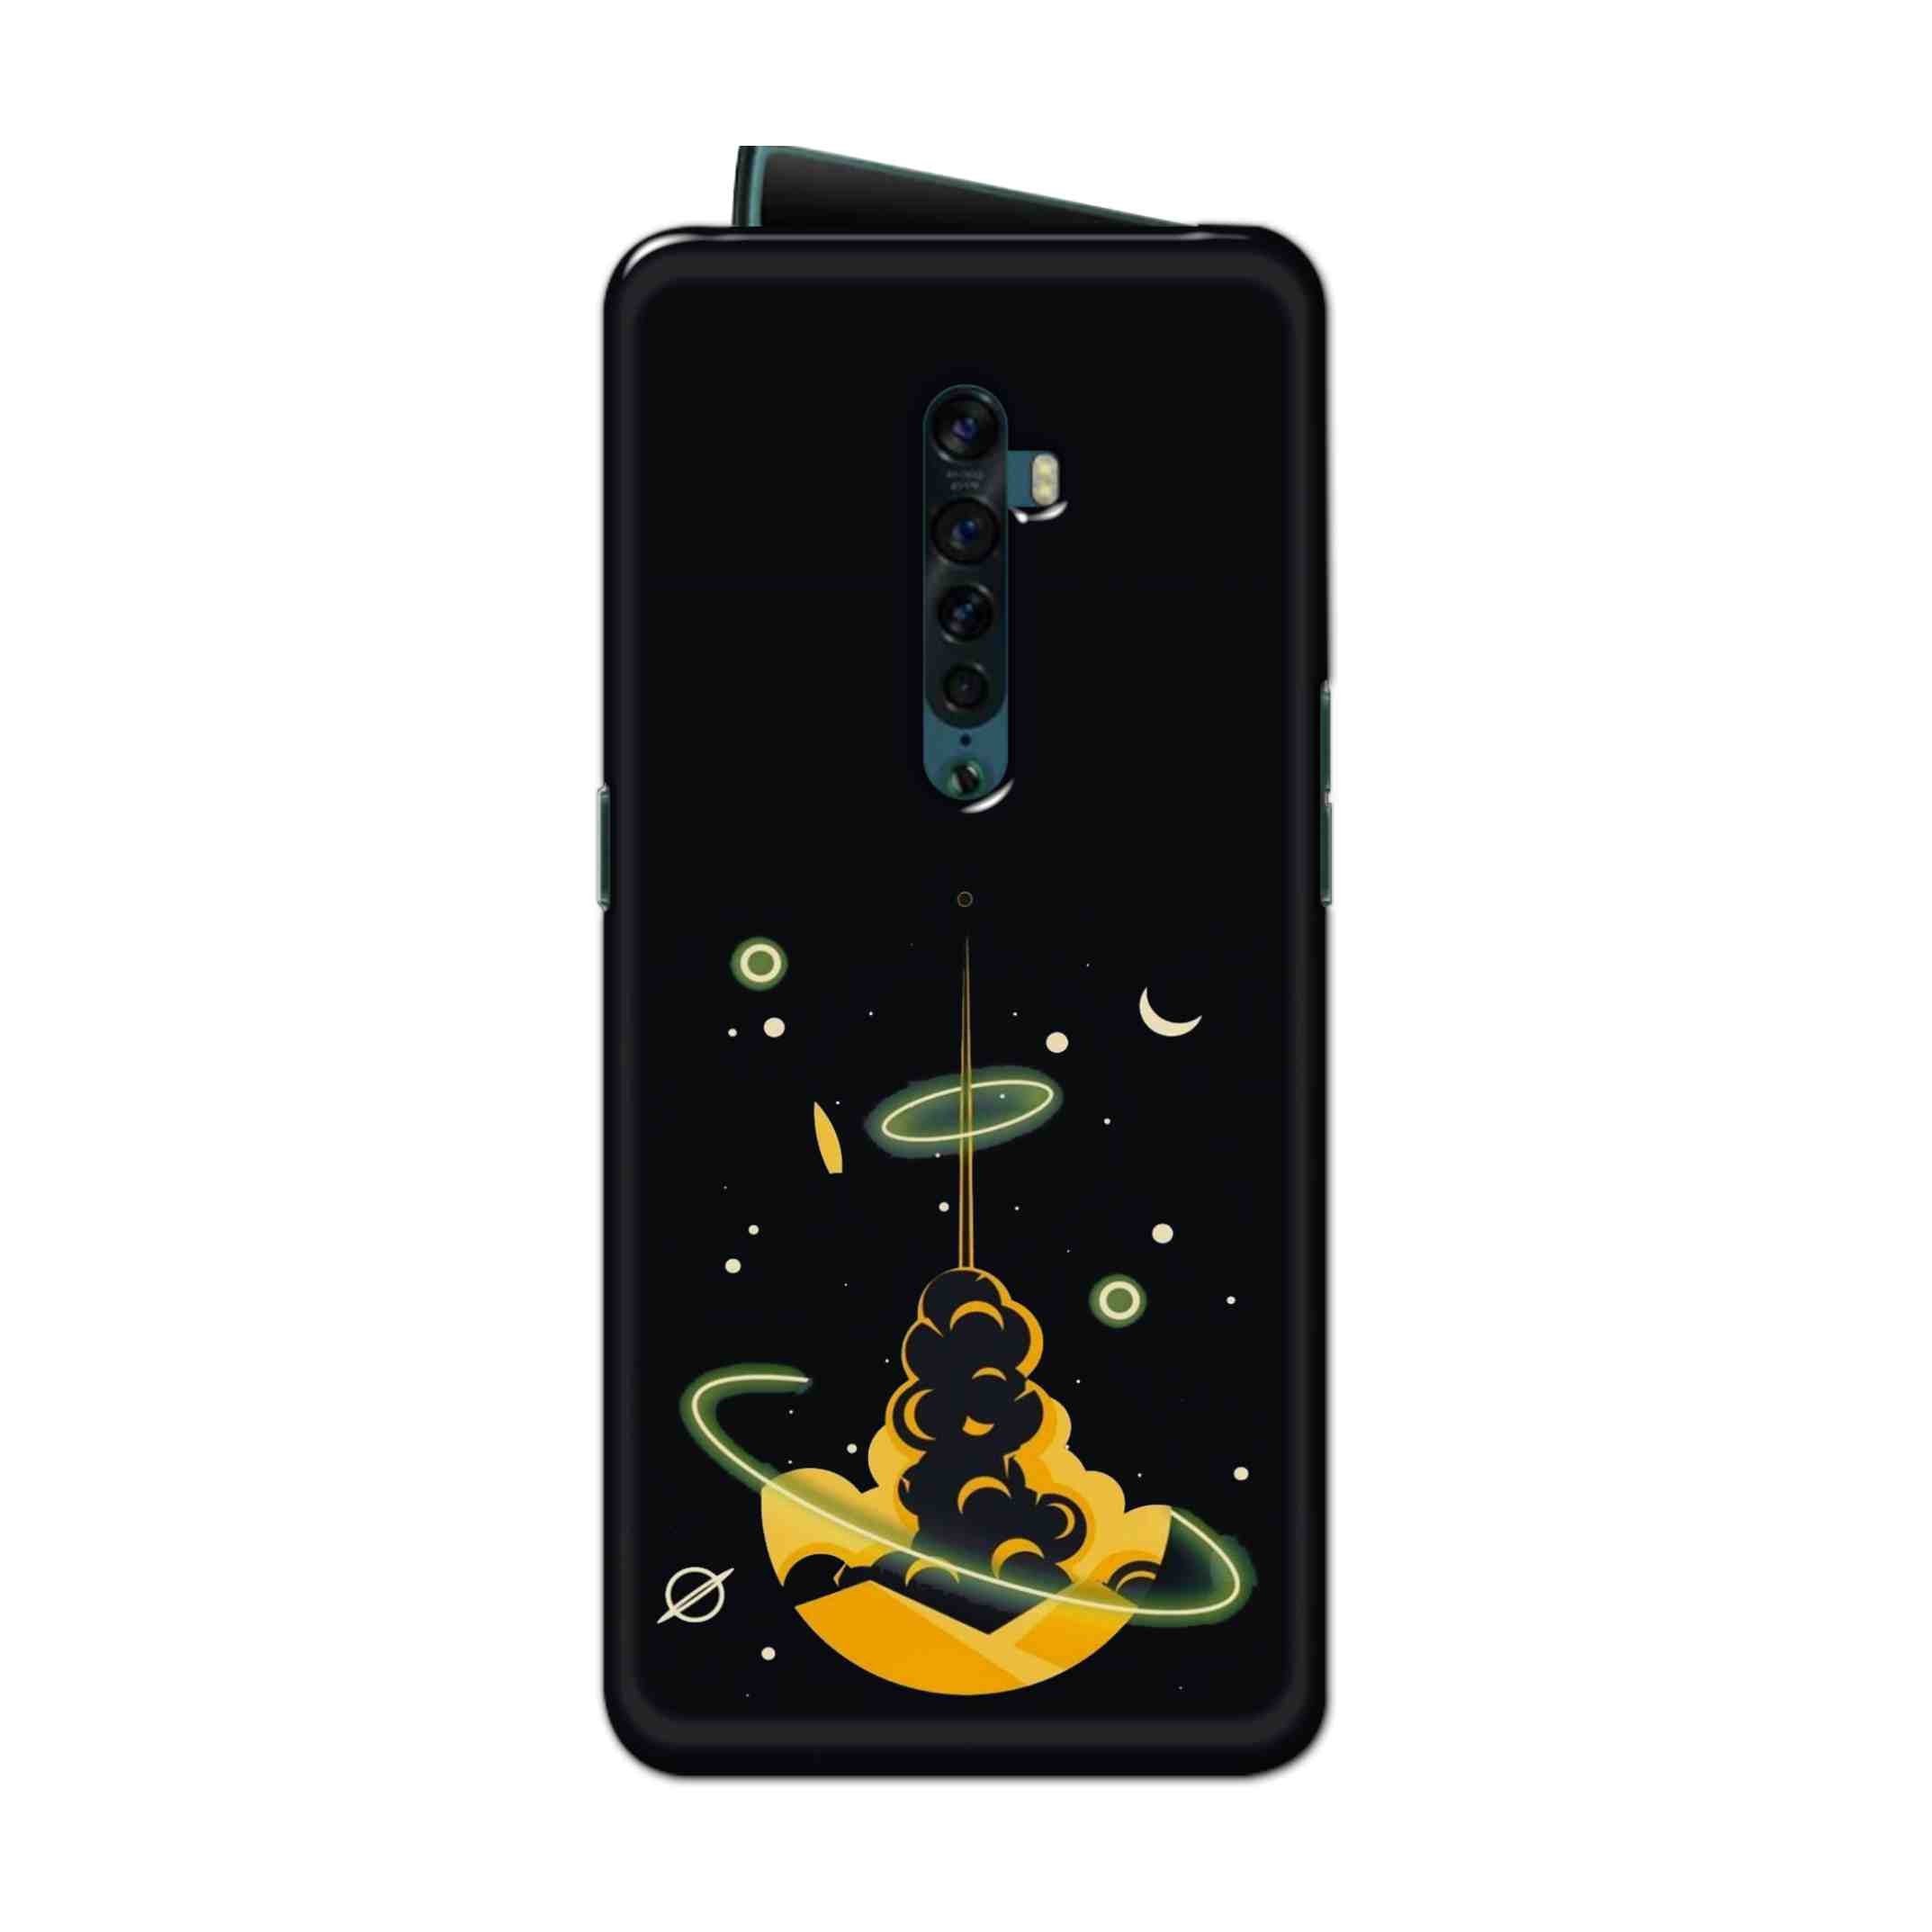 Buy Moon Hard Back Mobile Phone Case Cover For Oppo Reno 2 Online